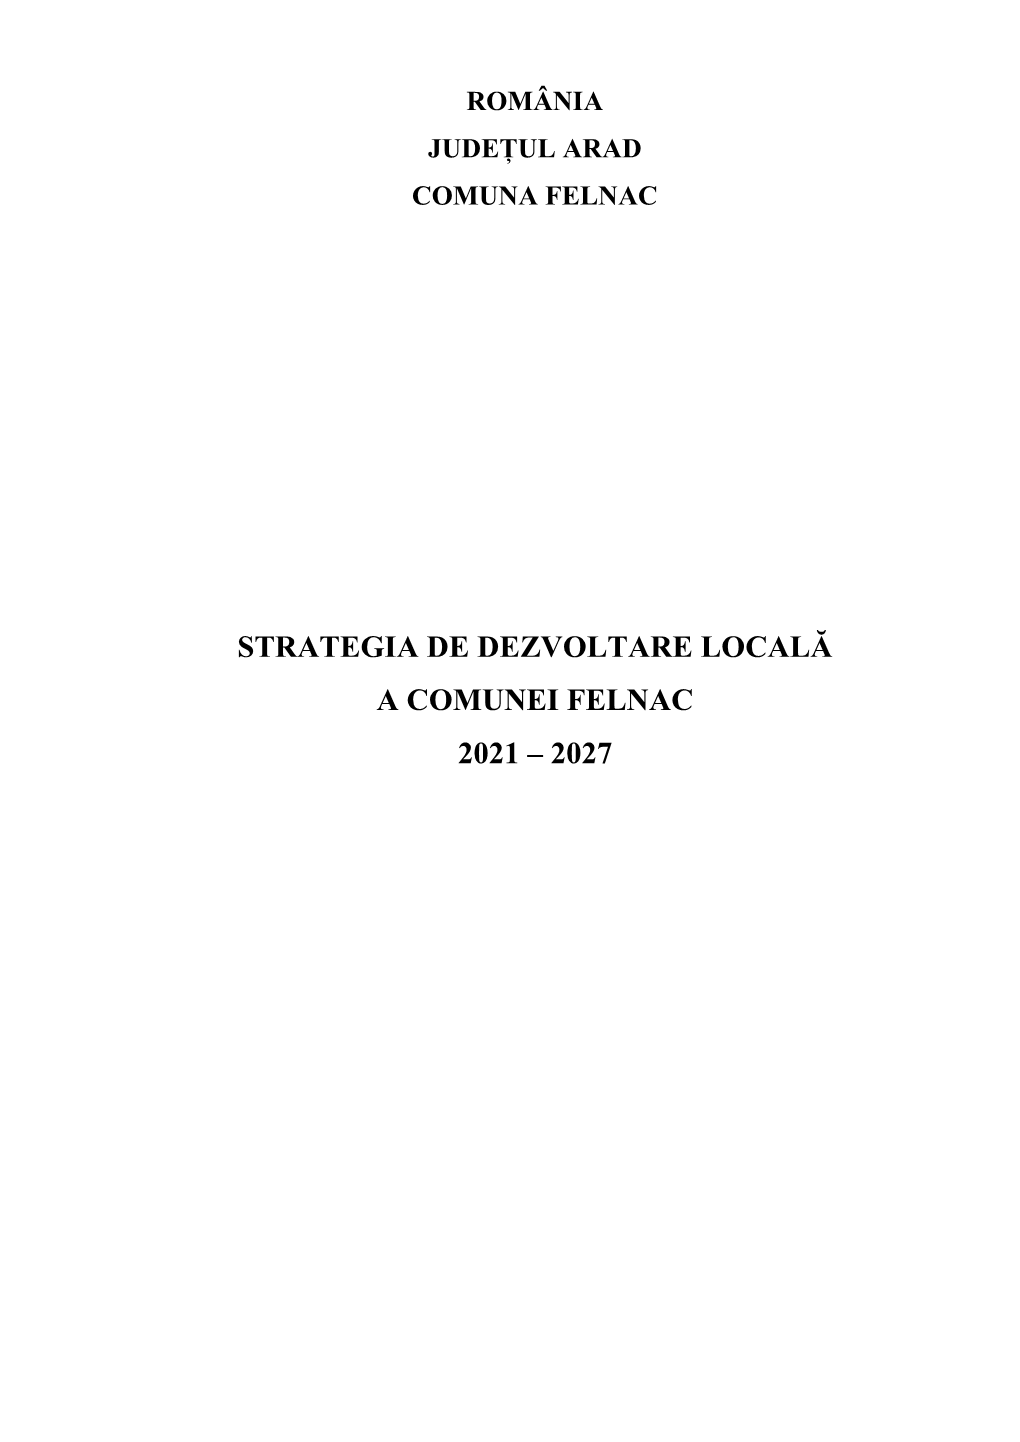 Strategia De Dezvoltare Locală 2021-2027 – Comuna Felnac